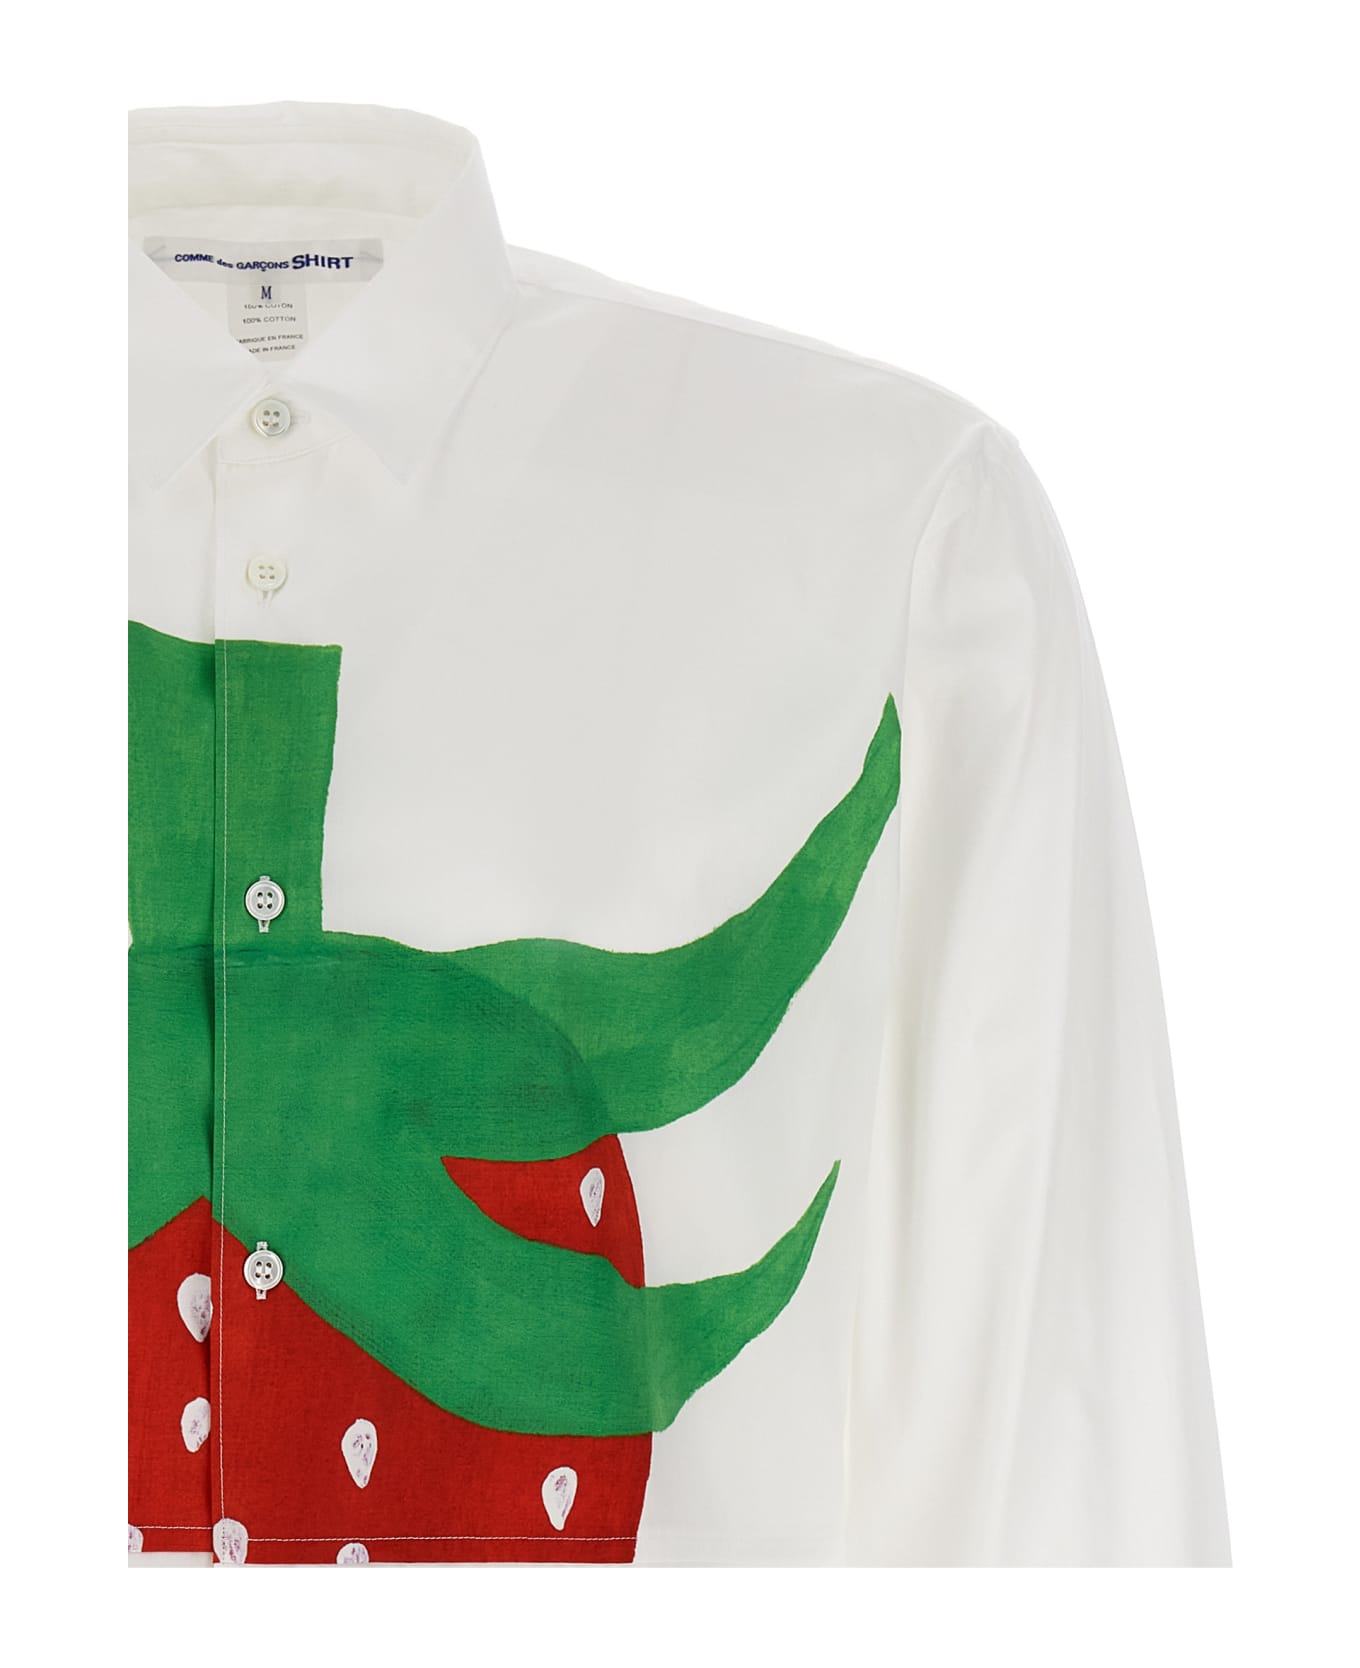 Comme des Garçons Shirt X Brett Westfall Strawberry Shirt - White